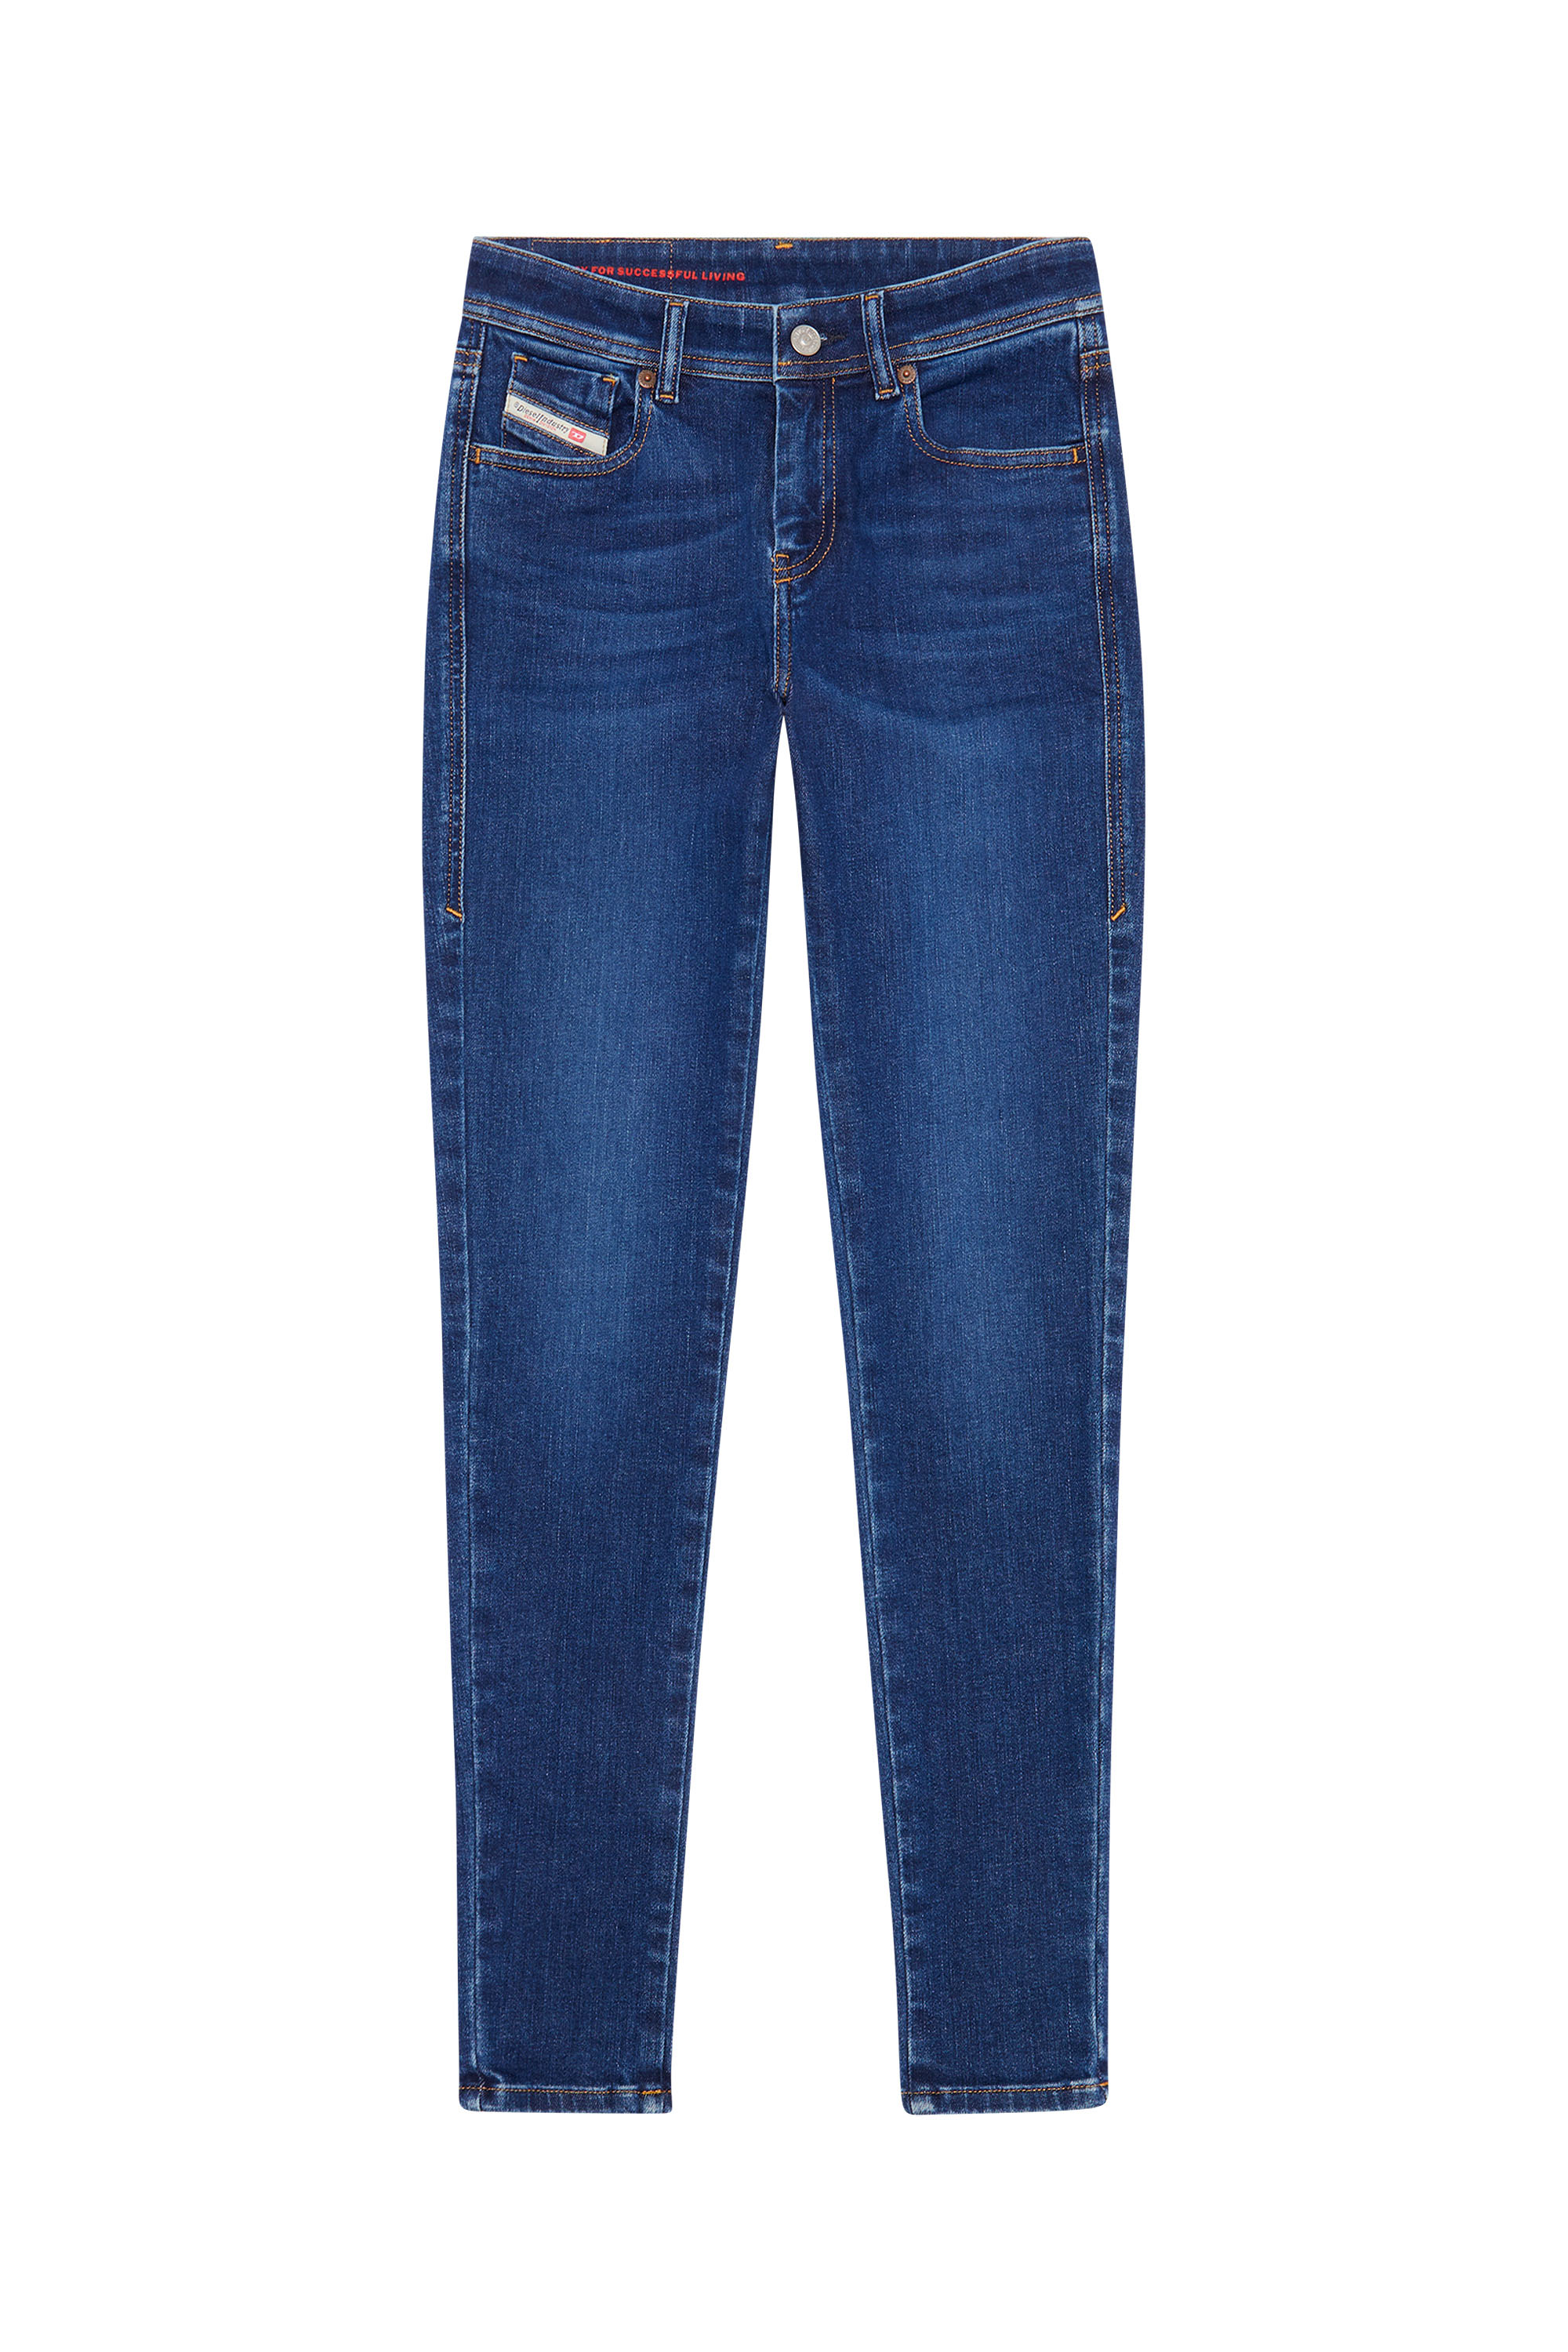 2017 SLANDY 09C19 Super skinny Jeans, Bleu Foncé - Jeans